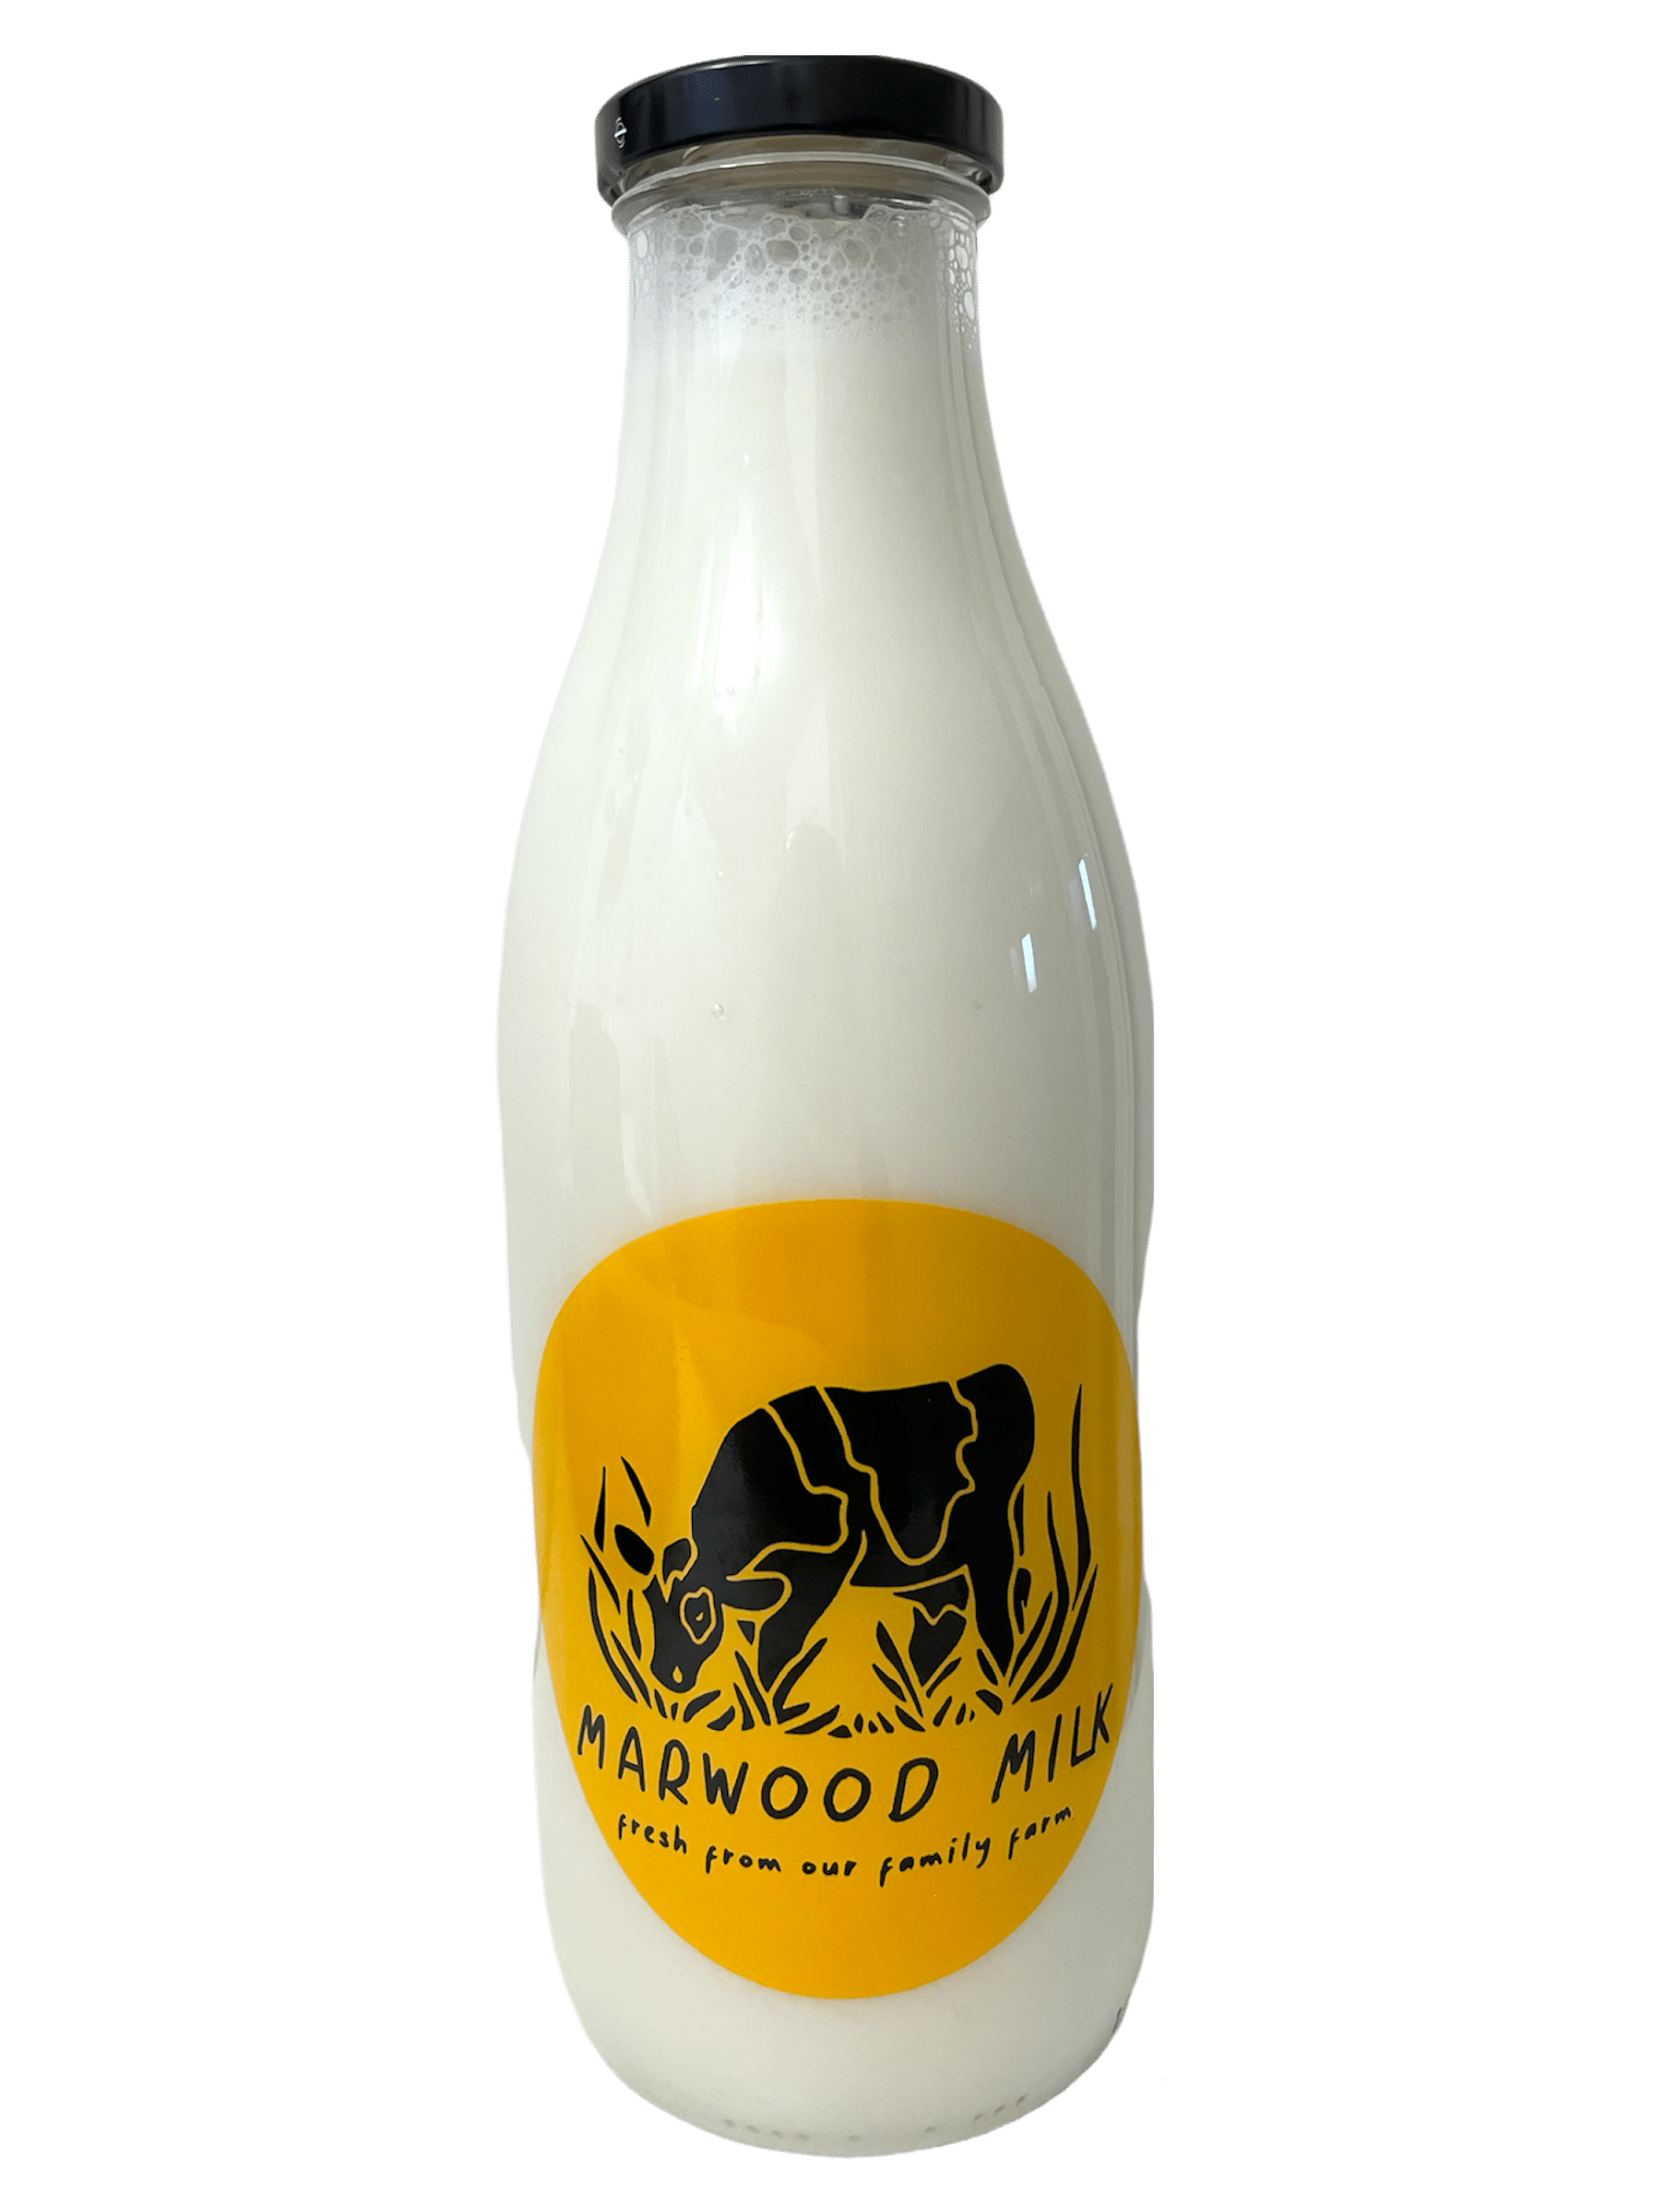 Marwood Milk - www.Kelis.info